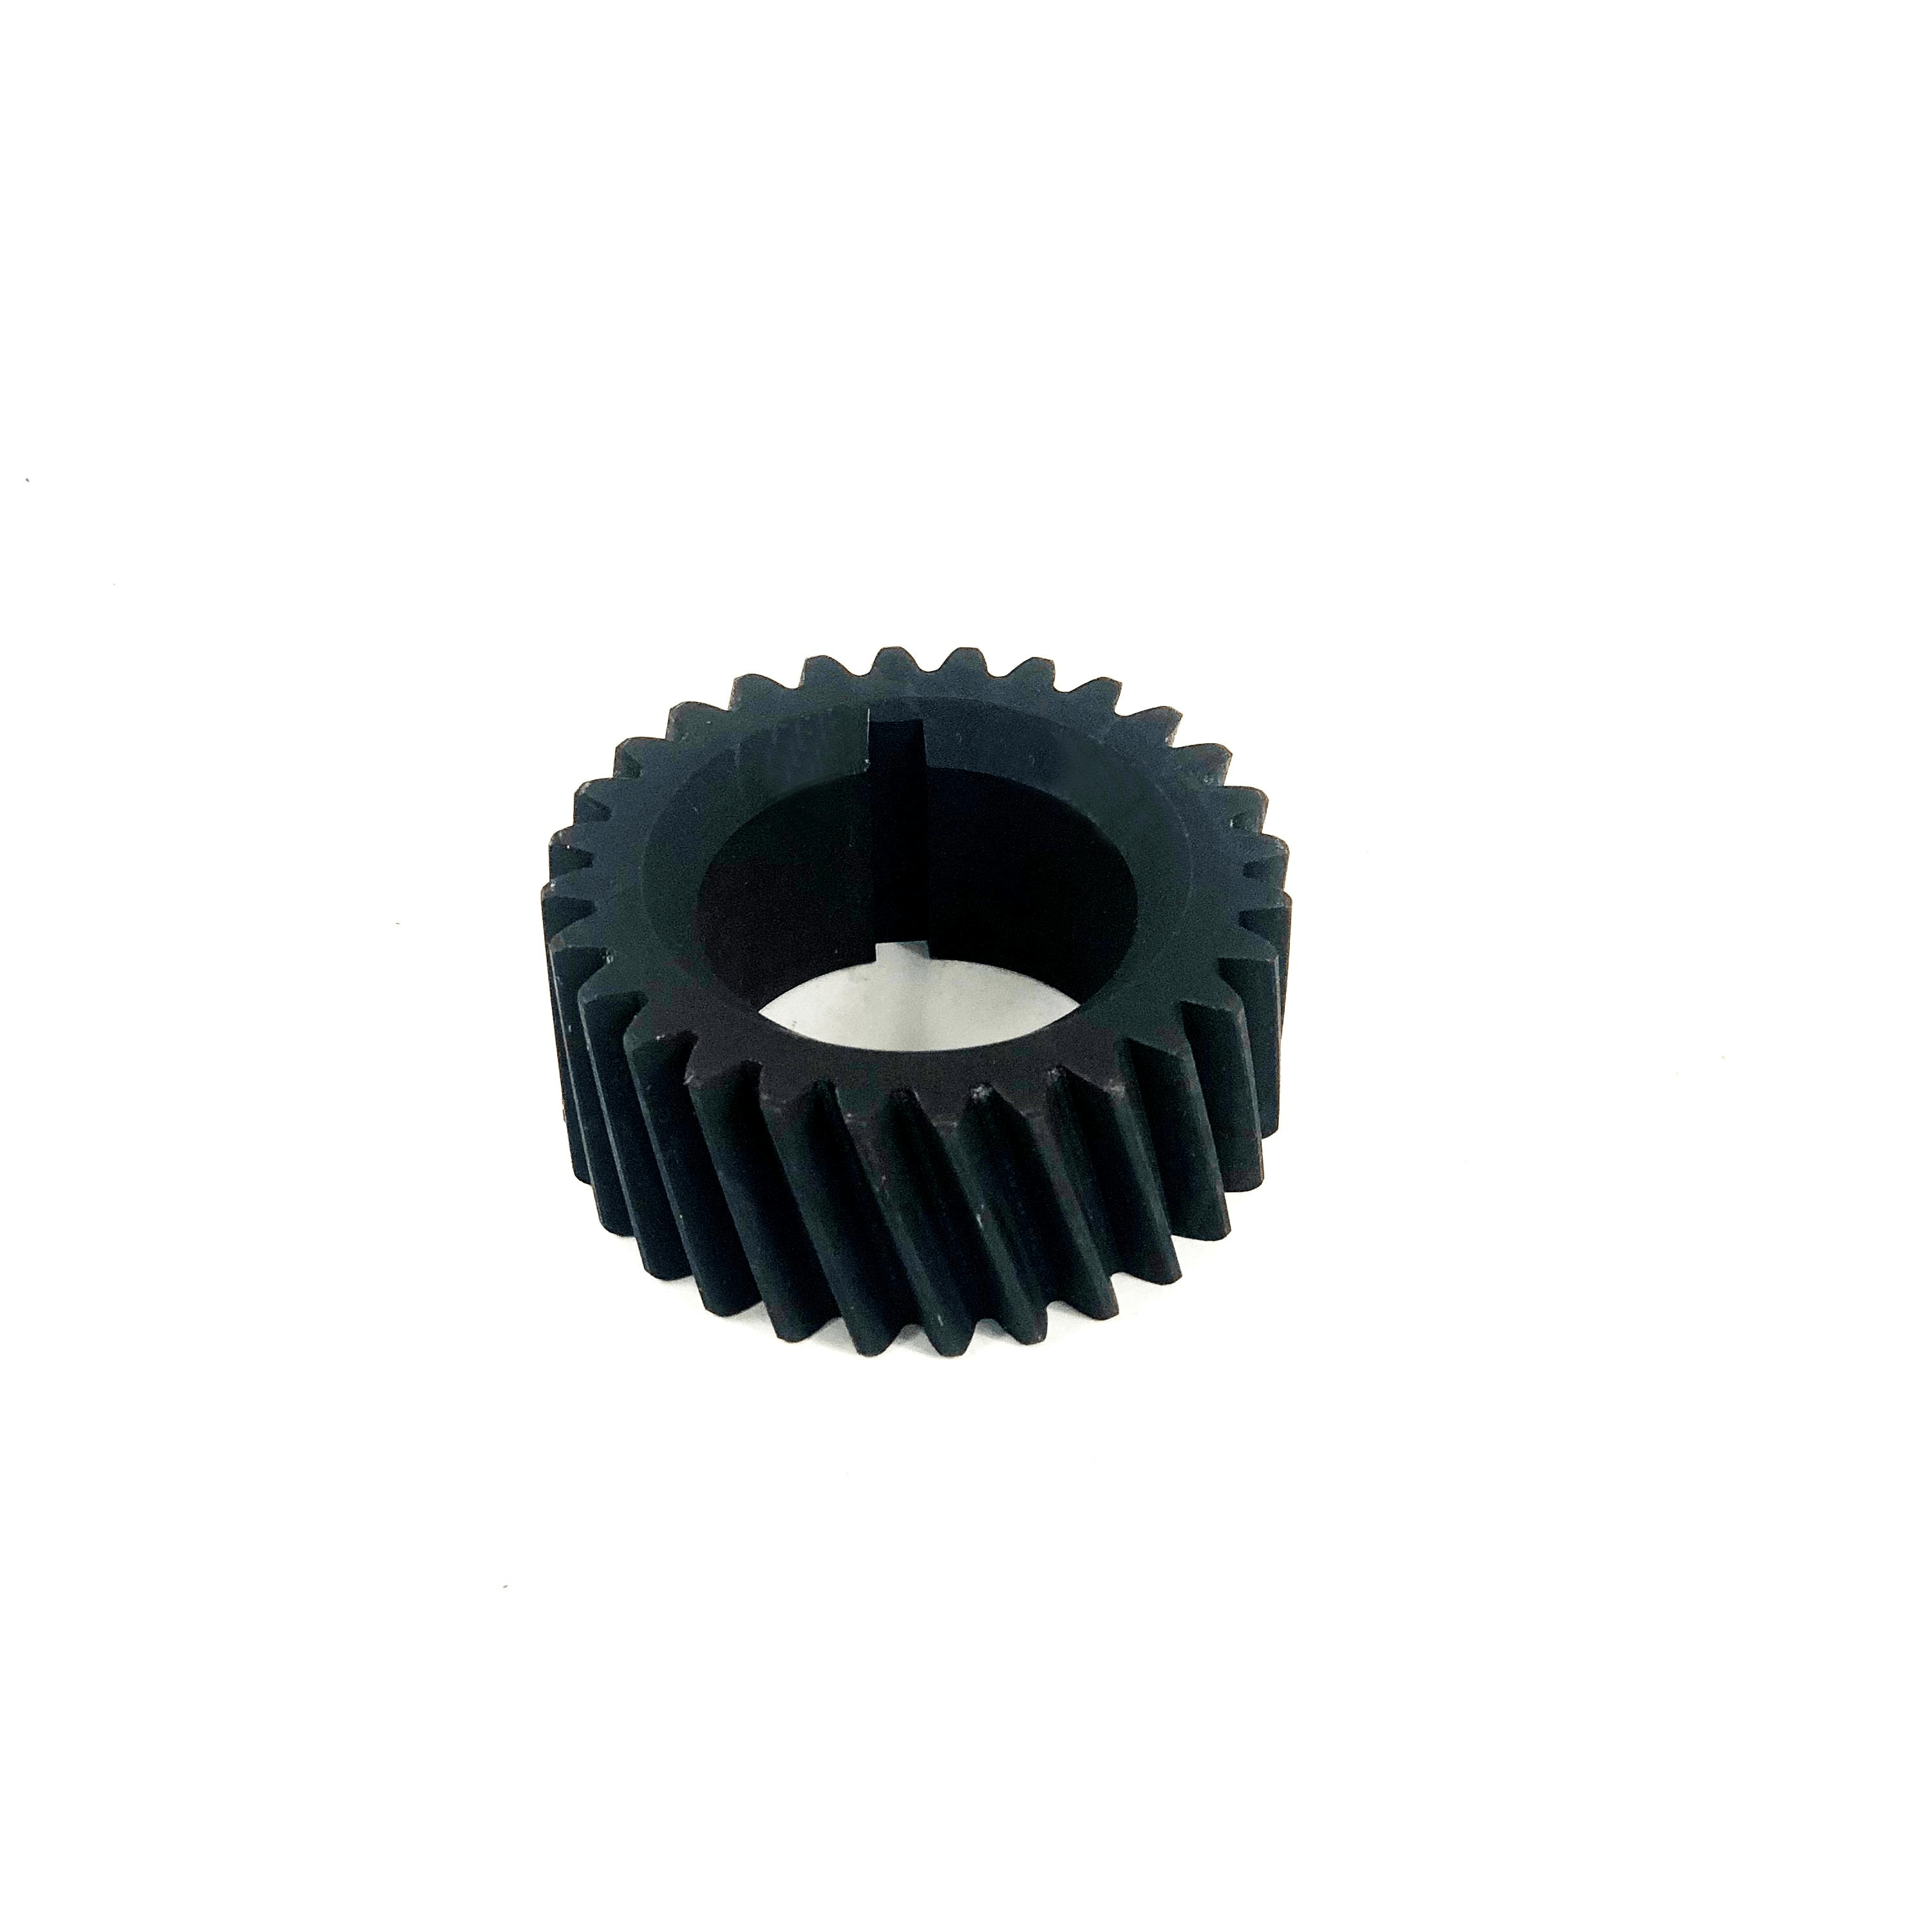 Crankshaft Gear – HCB067-9579